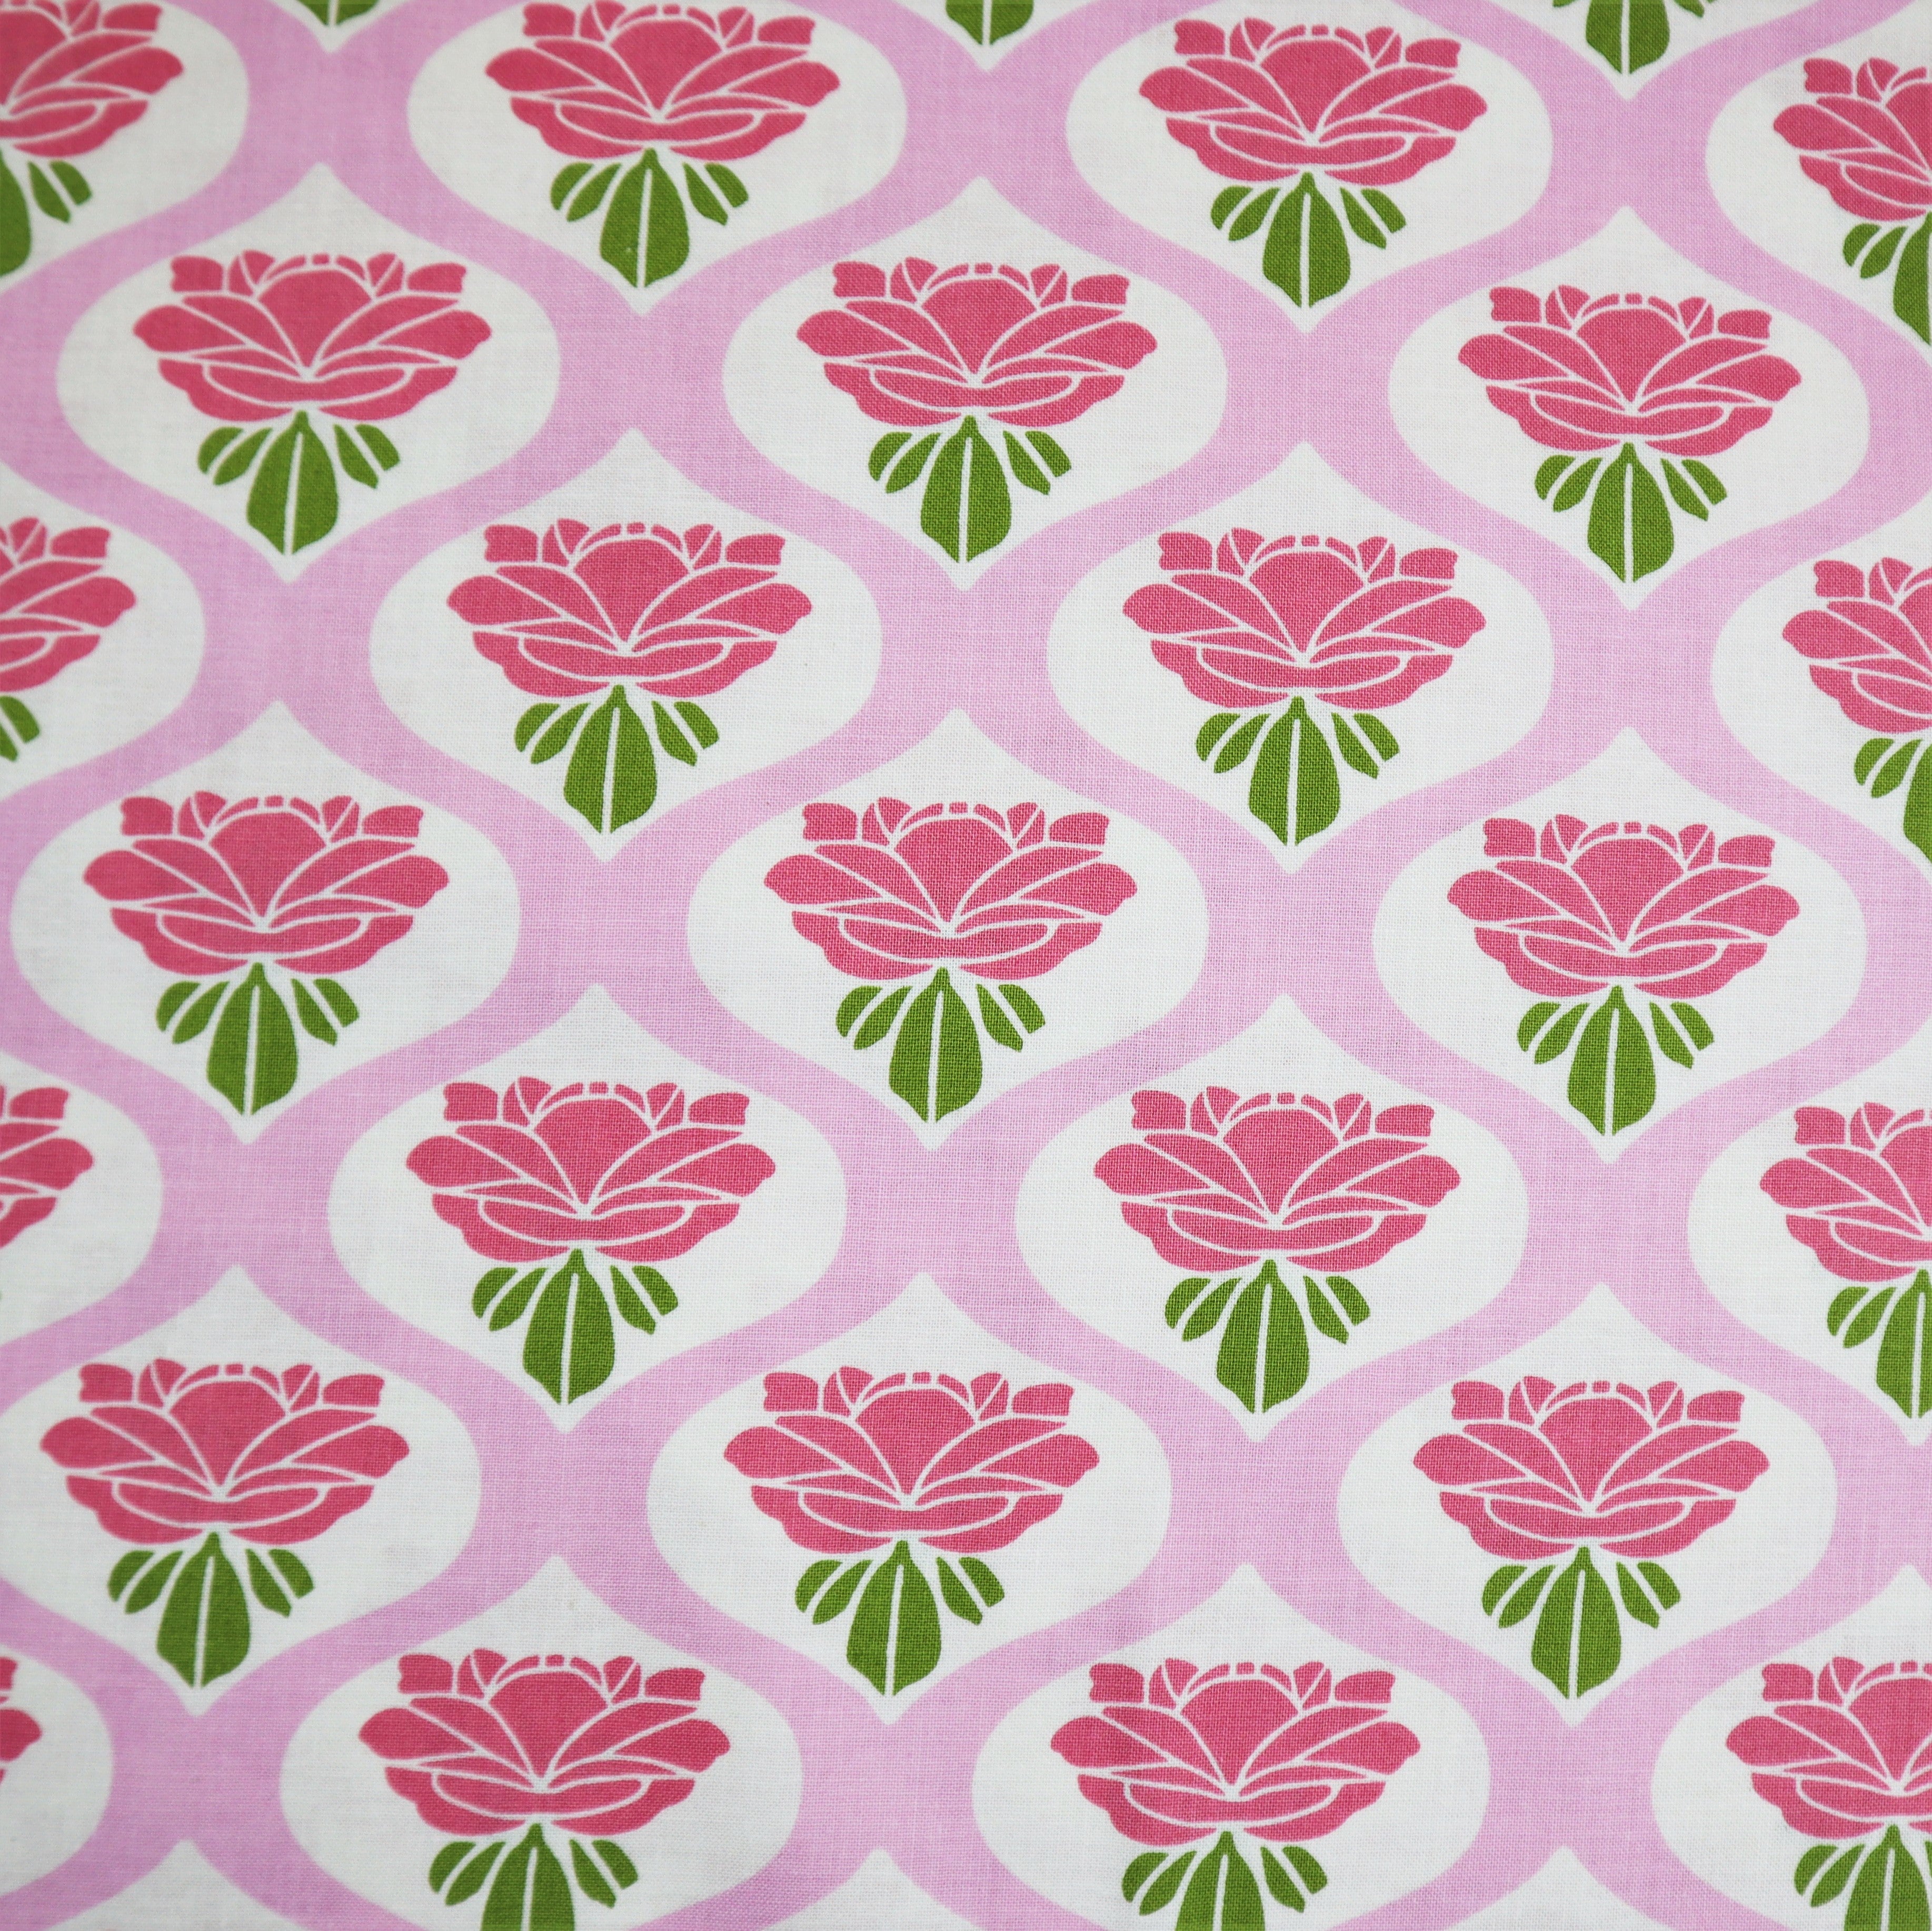 100% Cotton in Pink Flower Bud Print